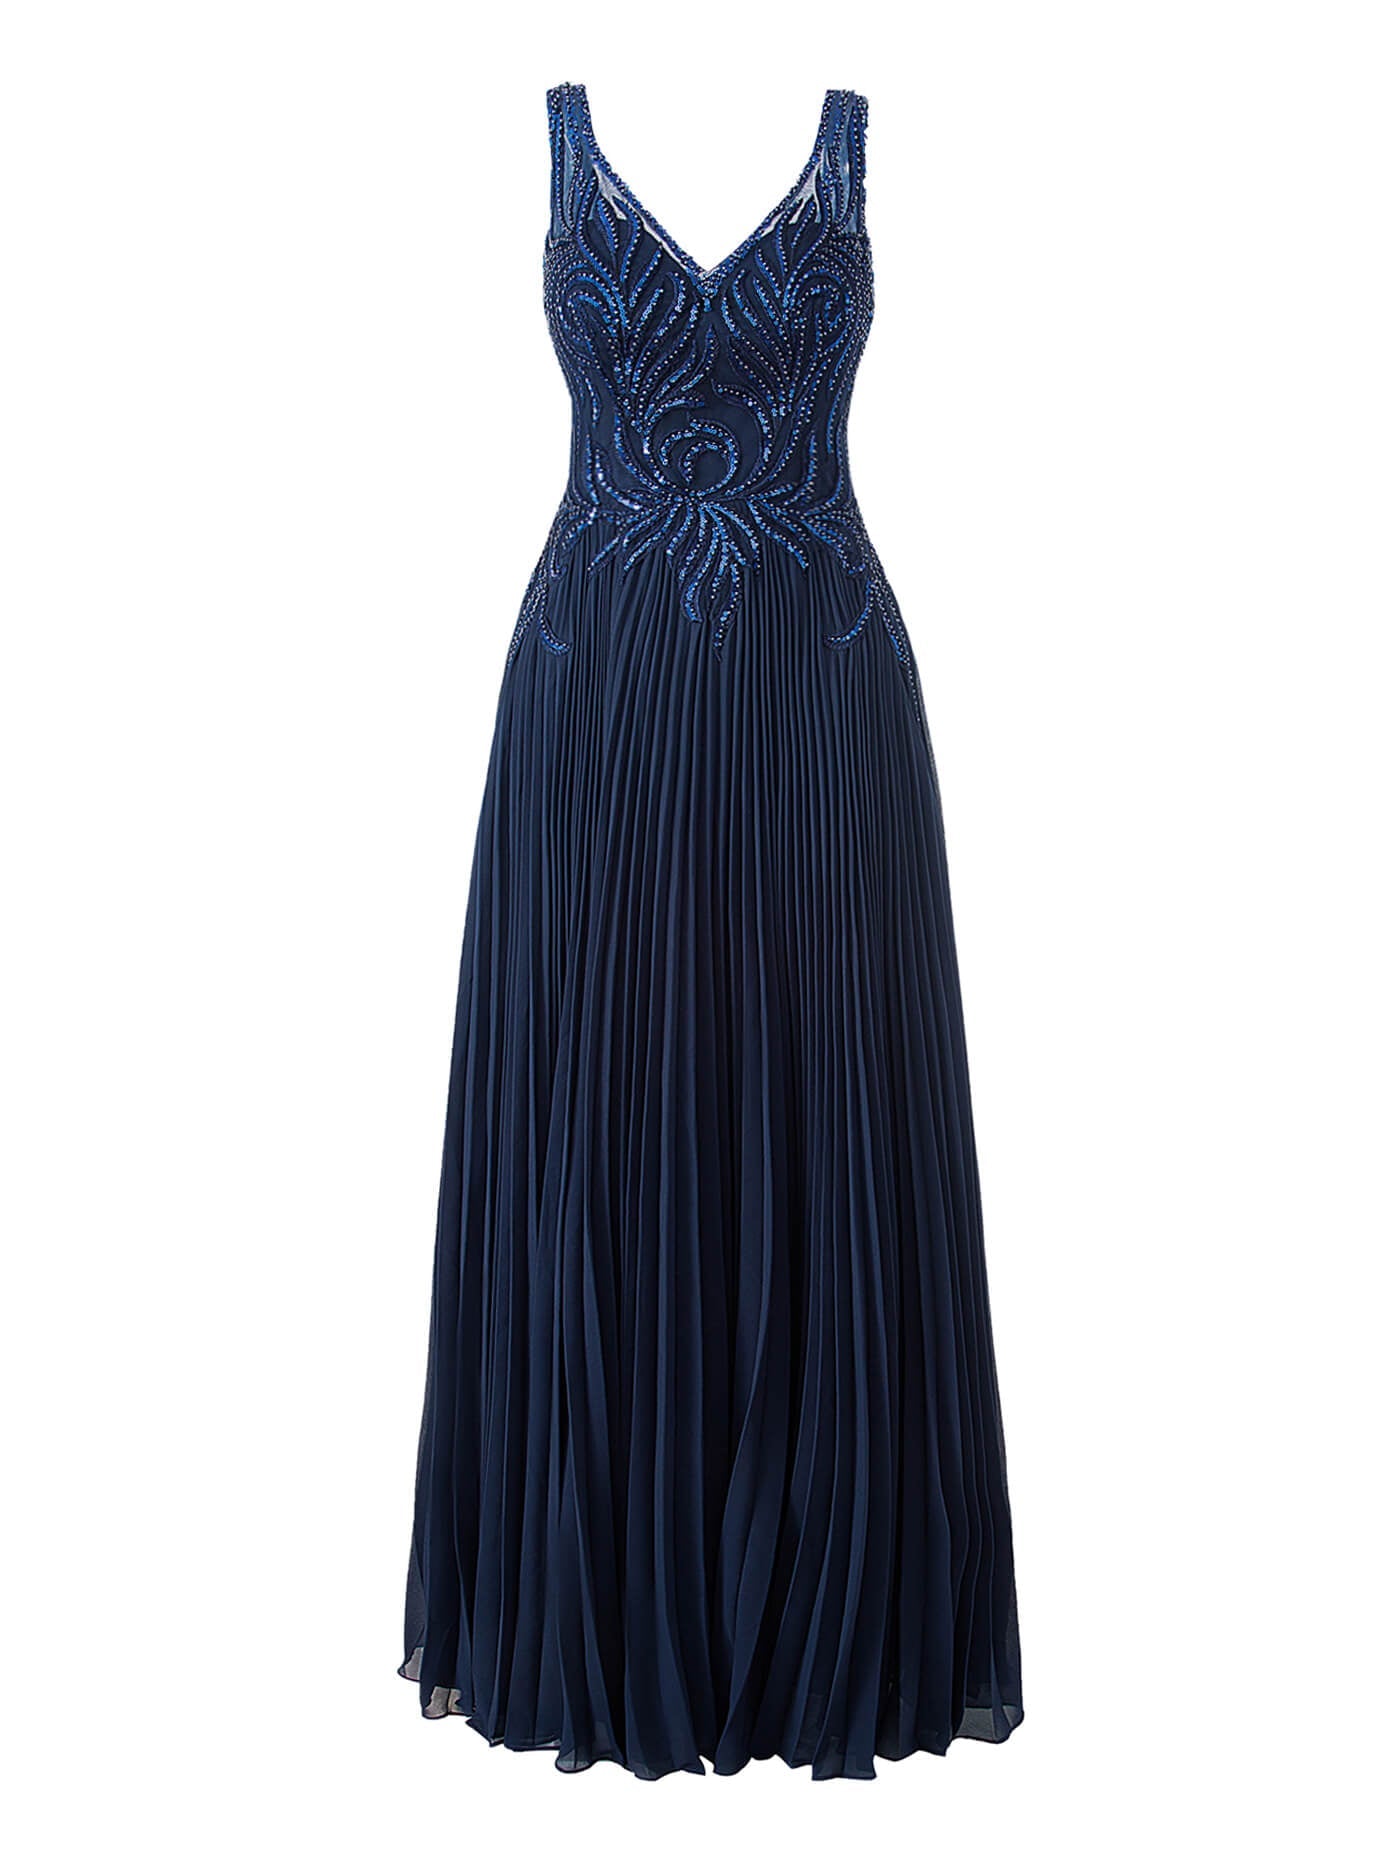 Abigail Dark Green | A-line V-neck Chiffon Prom Dress